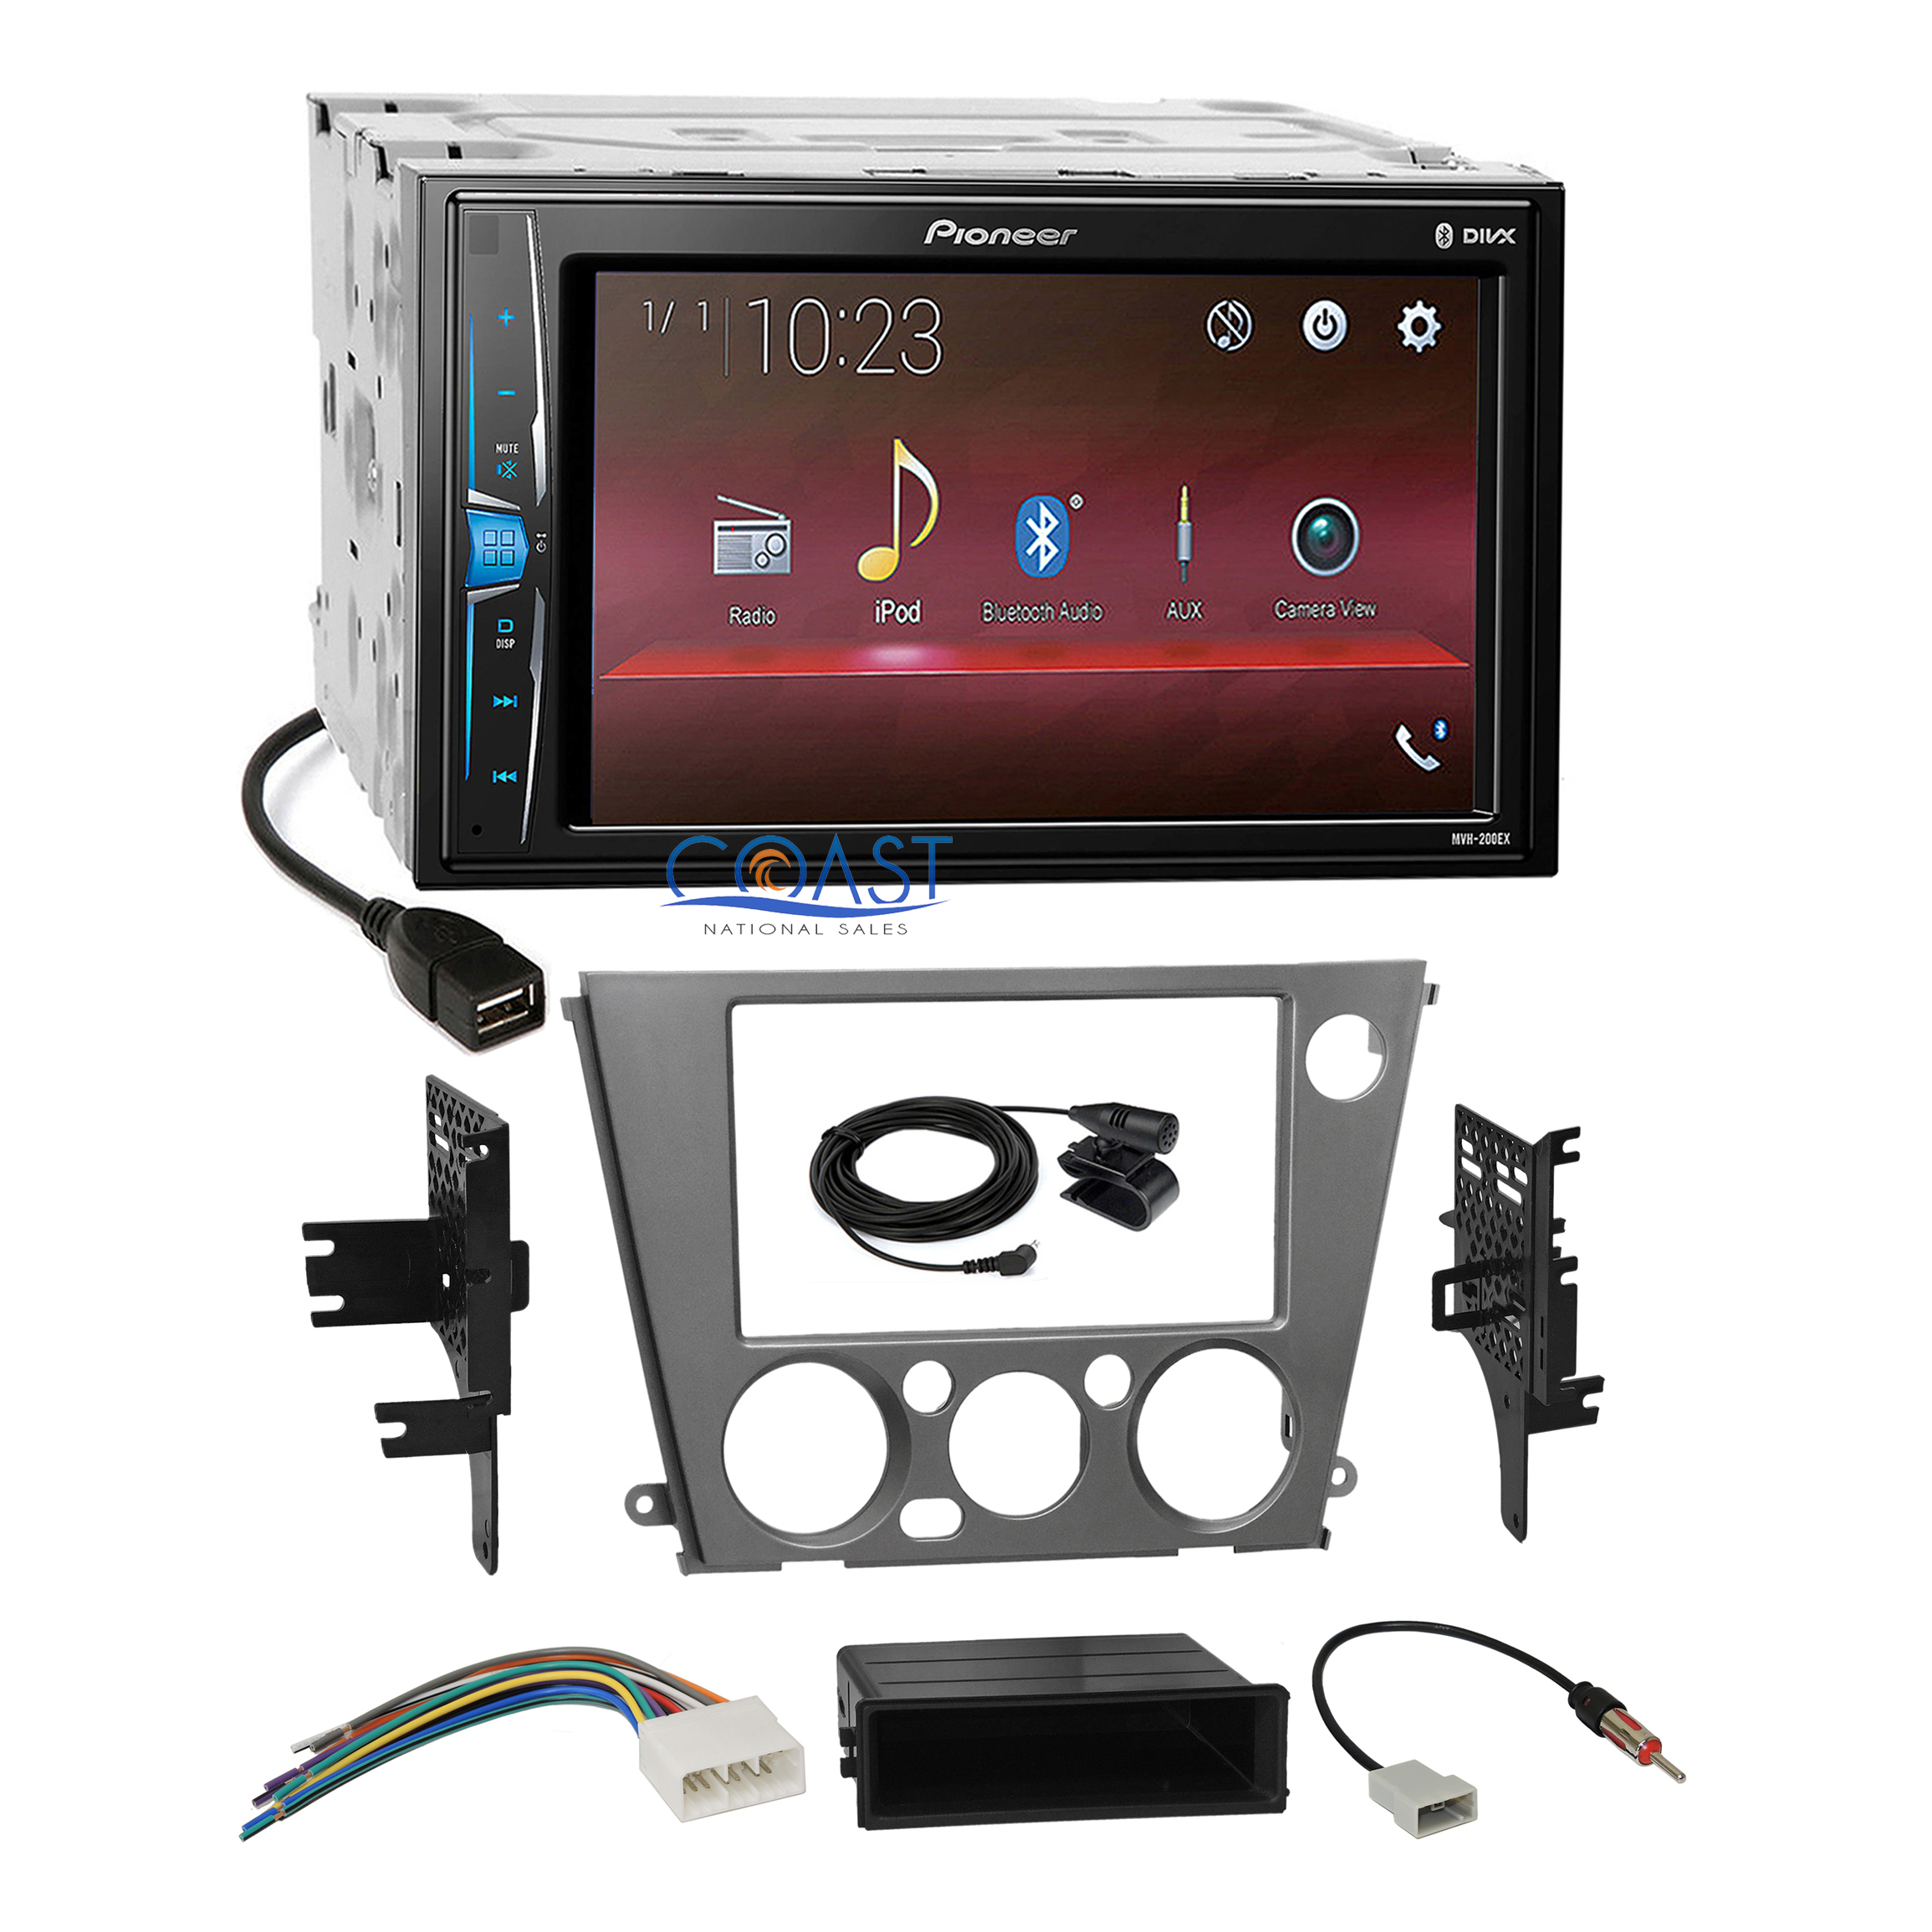 Pioneer USB Multimedia Stereo Dash Kit Harness for 0509